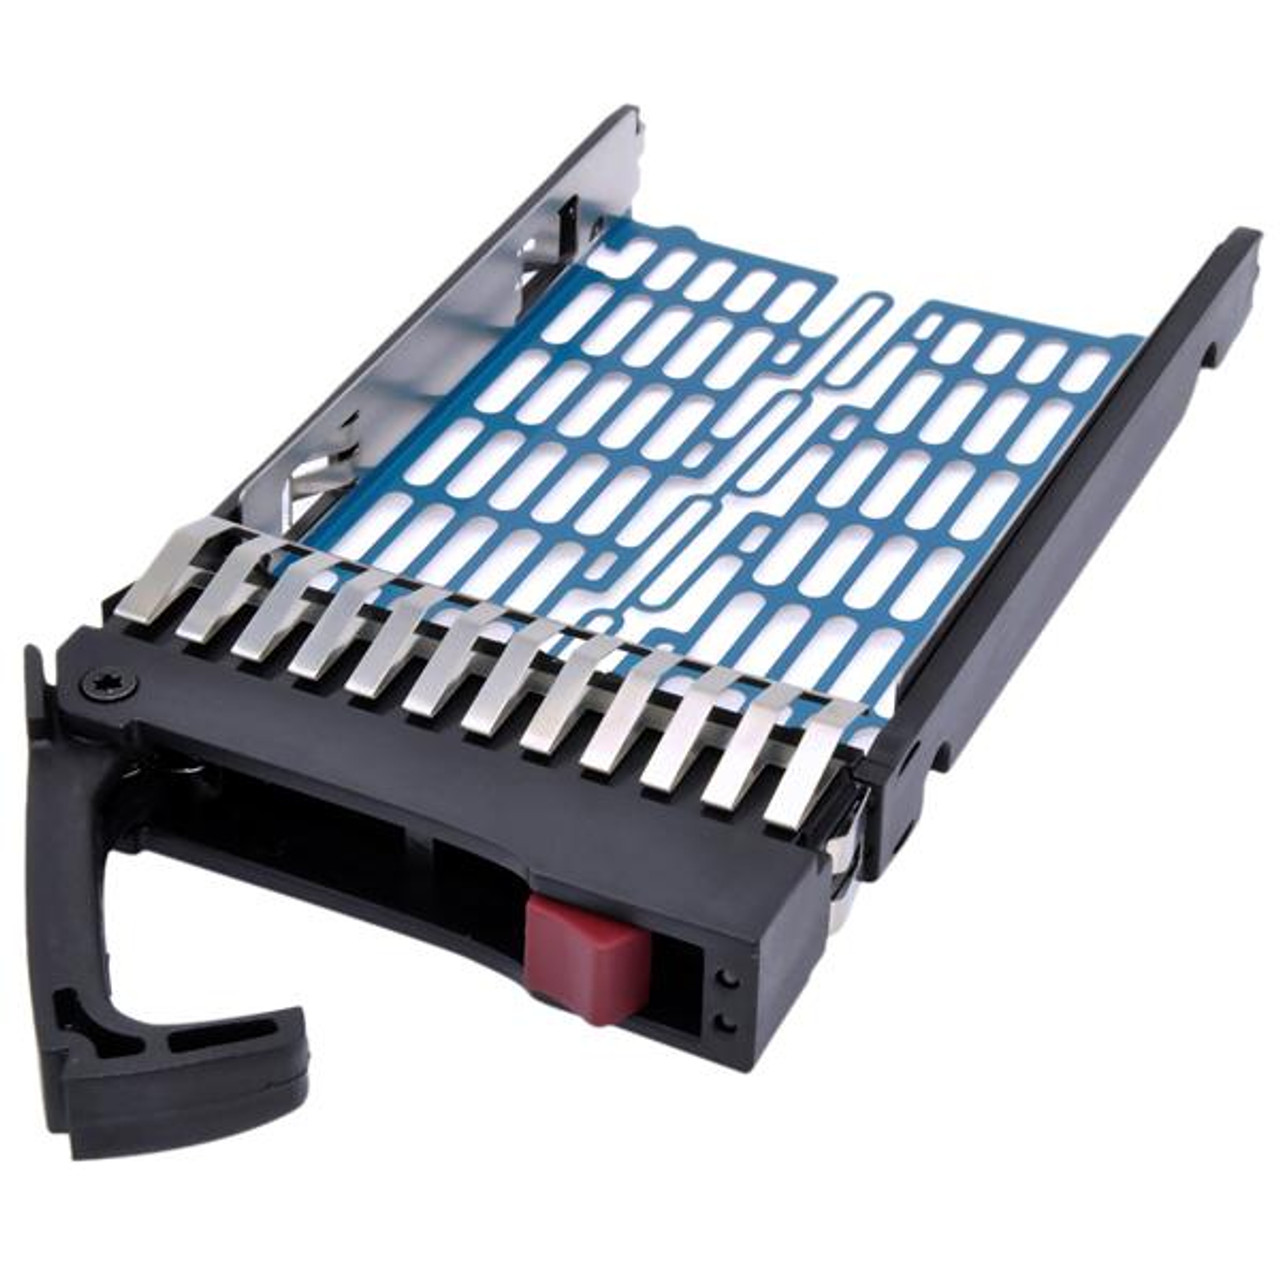 500223-001 - HP 2.5-inch SFF Hot-Plug SAS Hard Drive Tray/Caddy for HP ProLiant ML/DL Servers